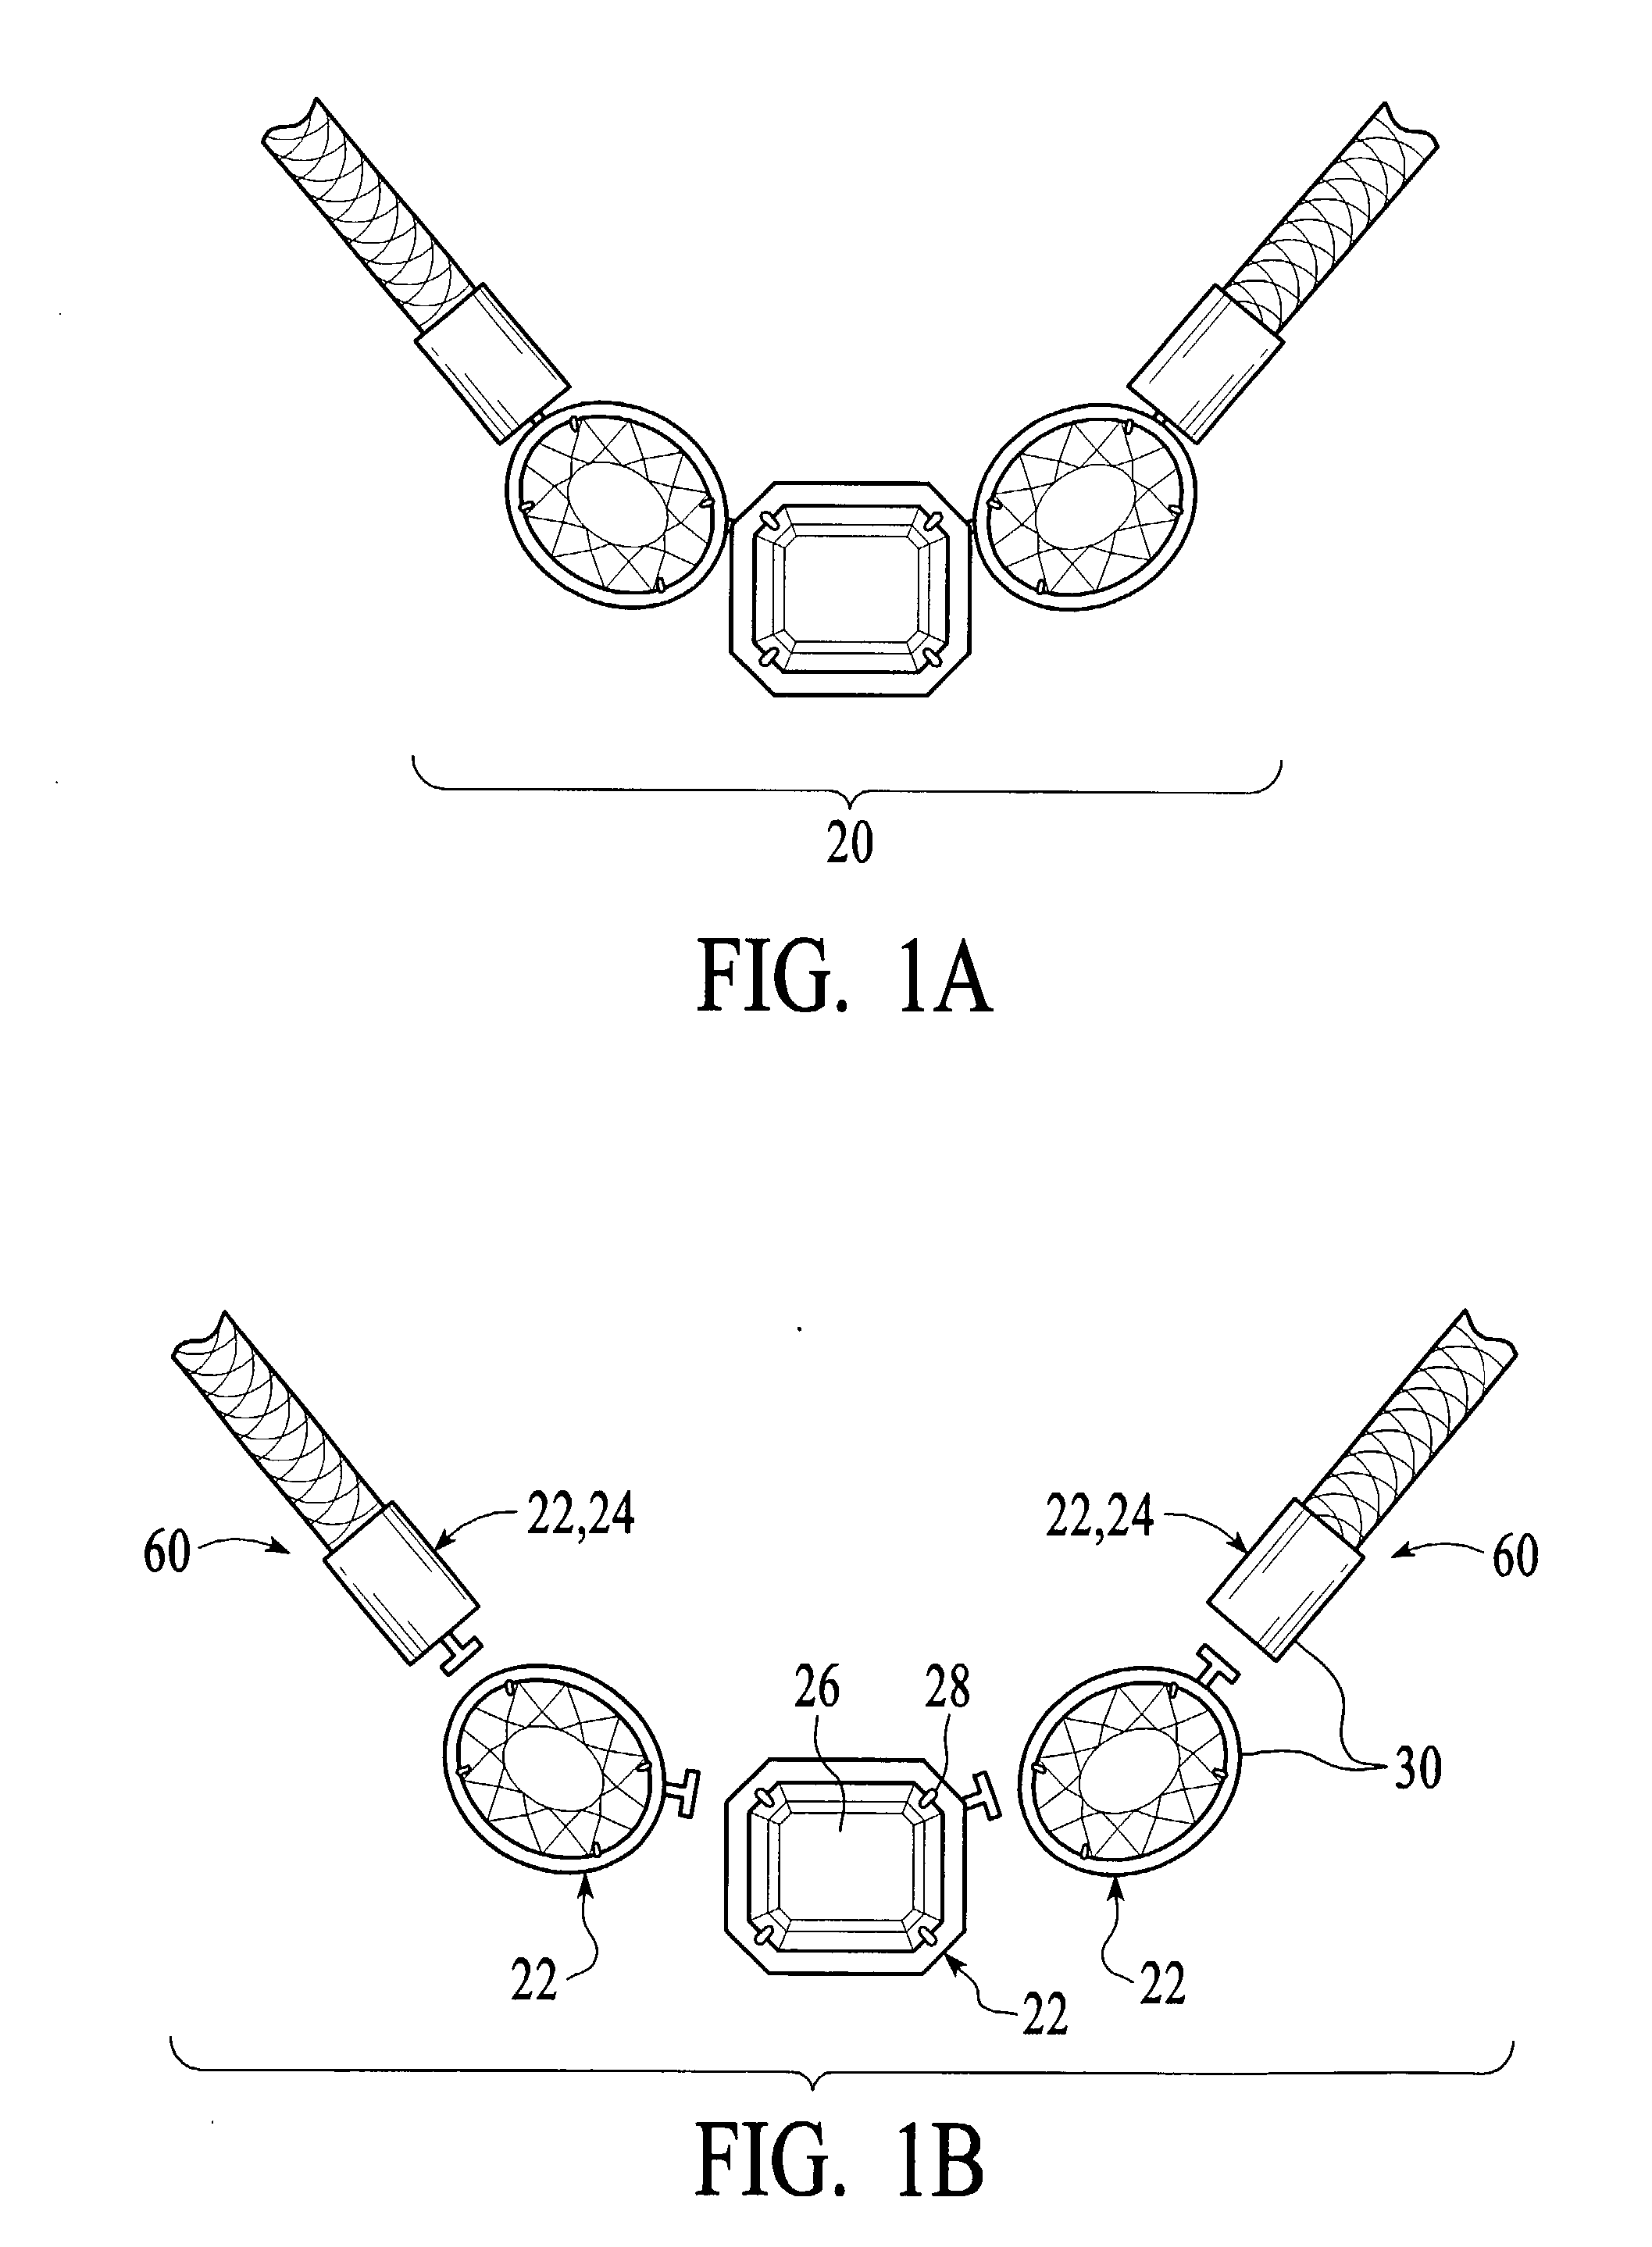 Interchangeable jewelry system